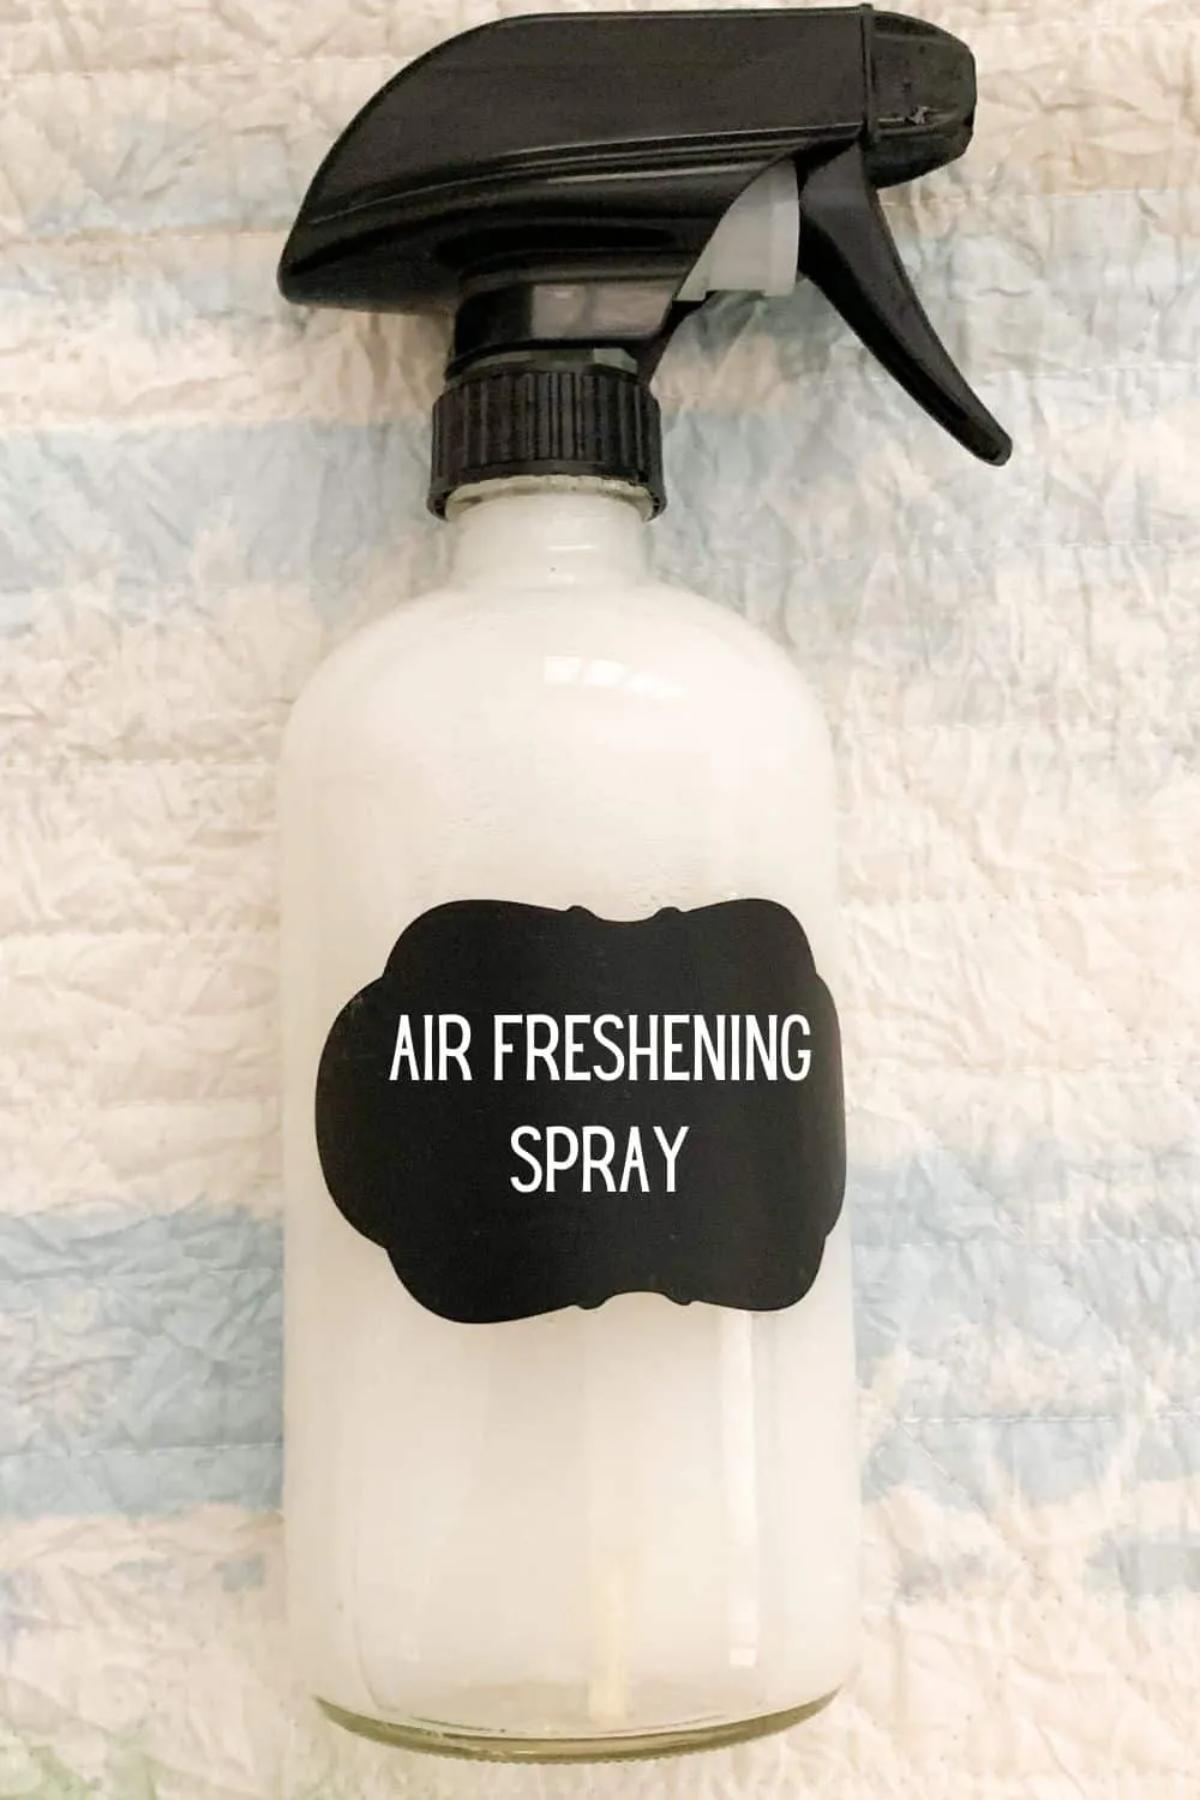 All Natural Homemade Air Freshener Spray